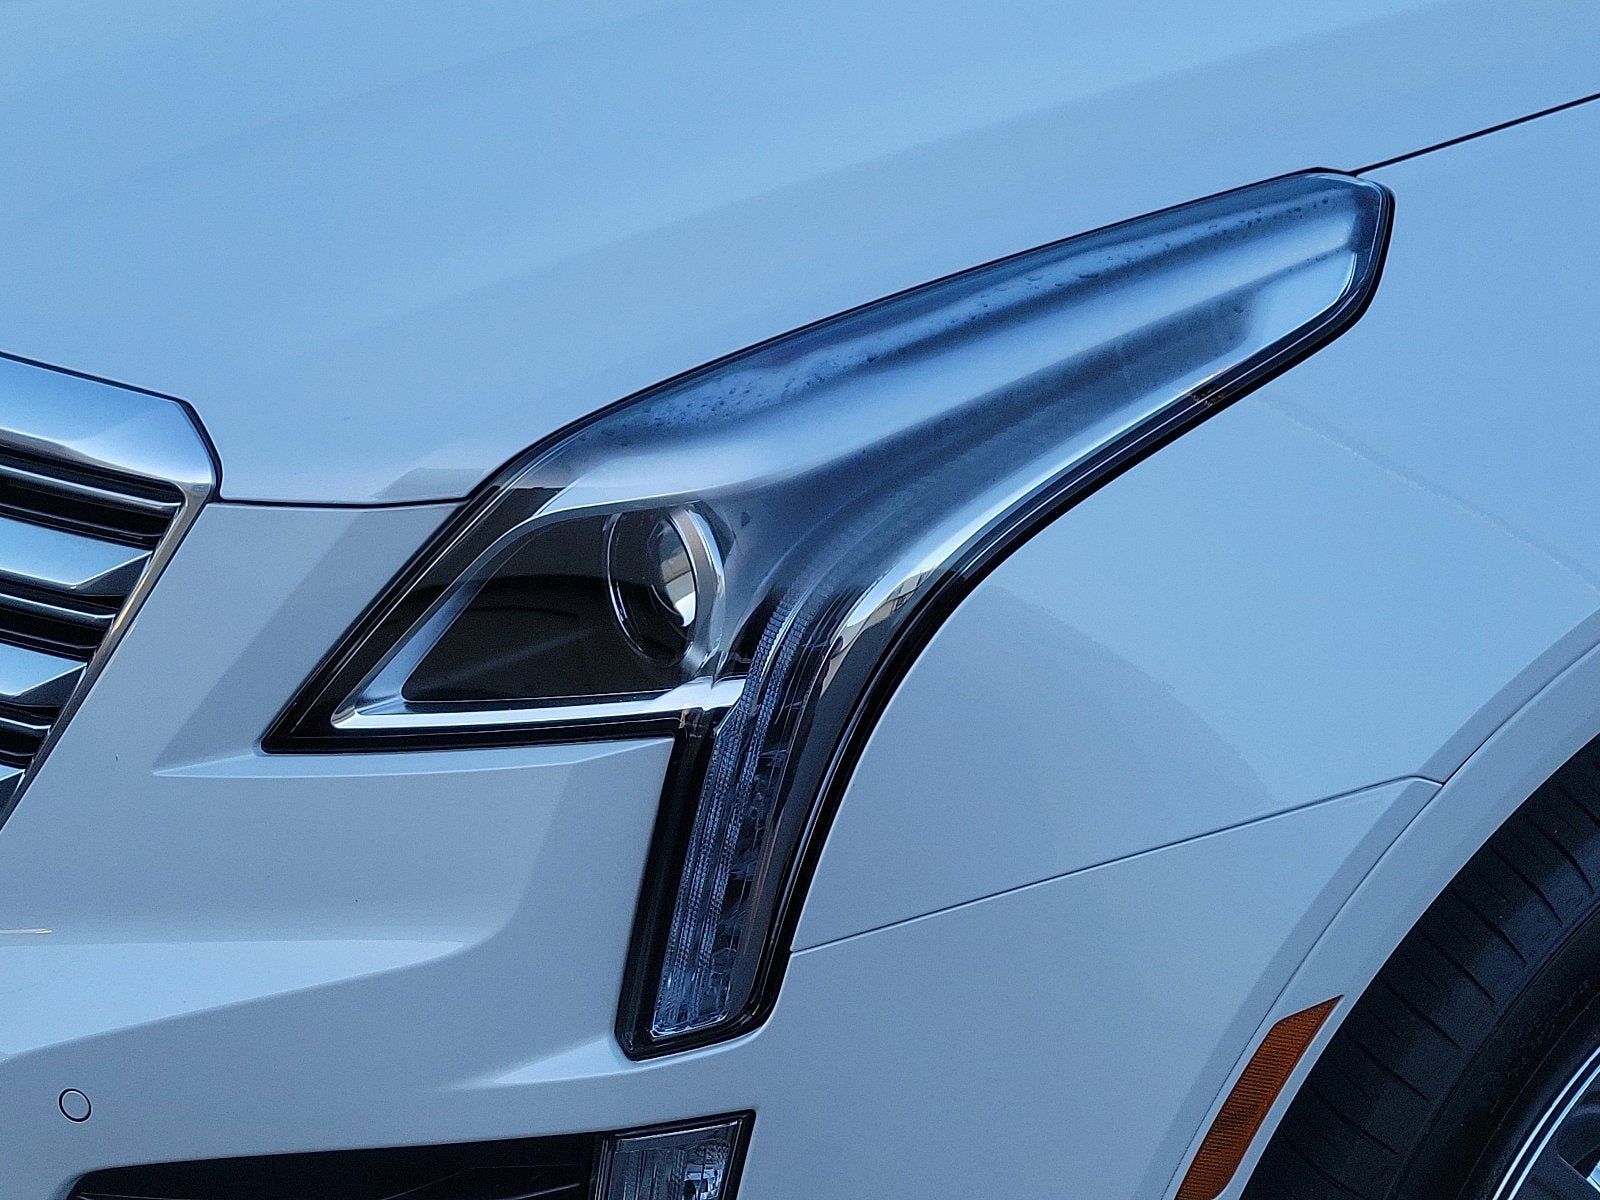 2019 Cadillac XT5 Luxury FWD